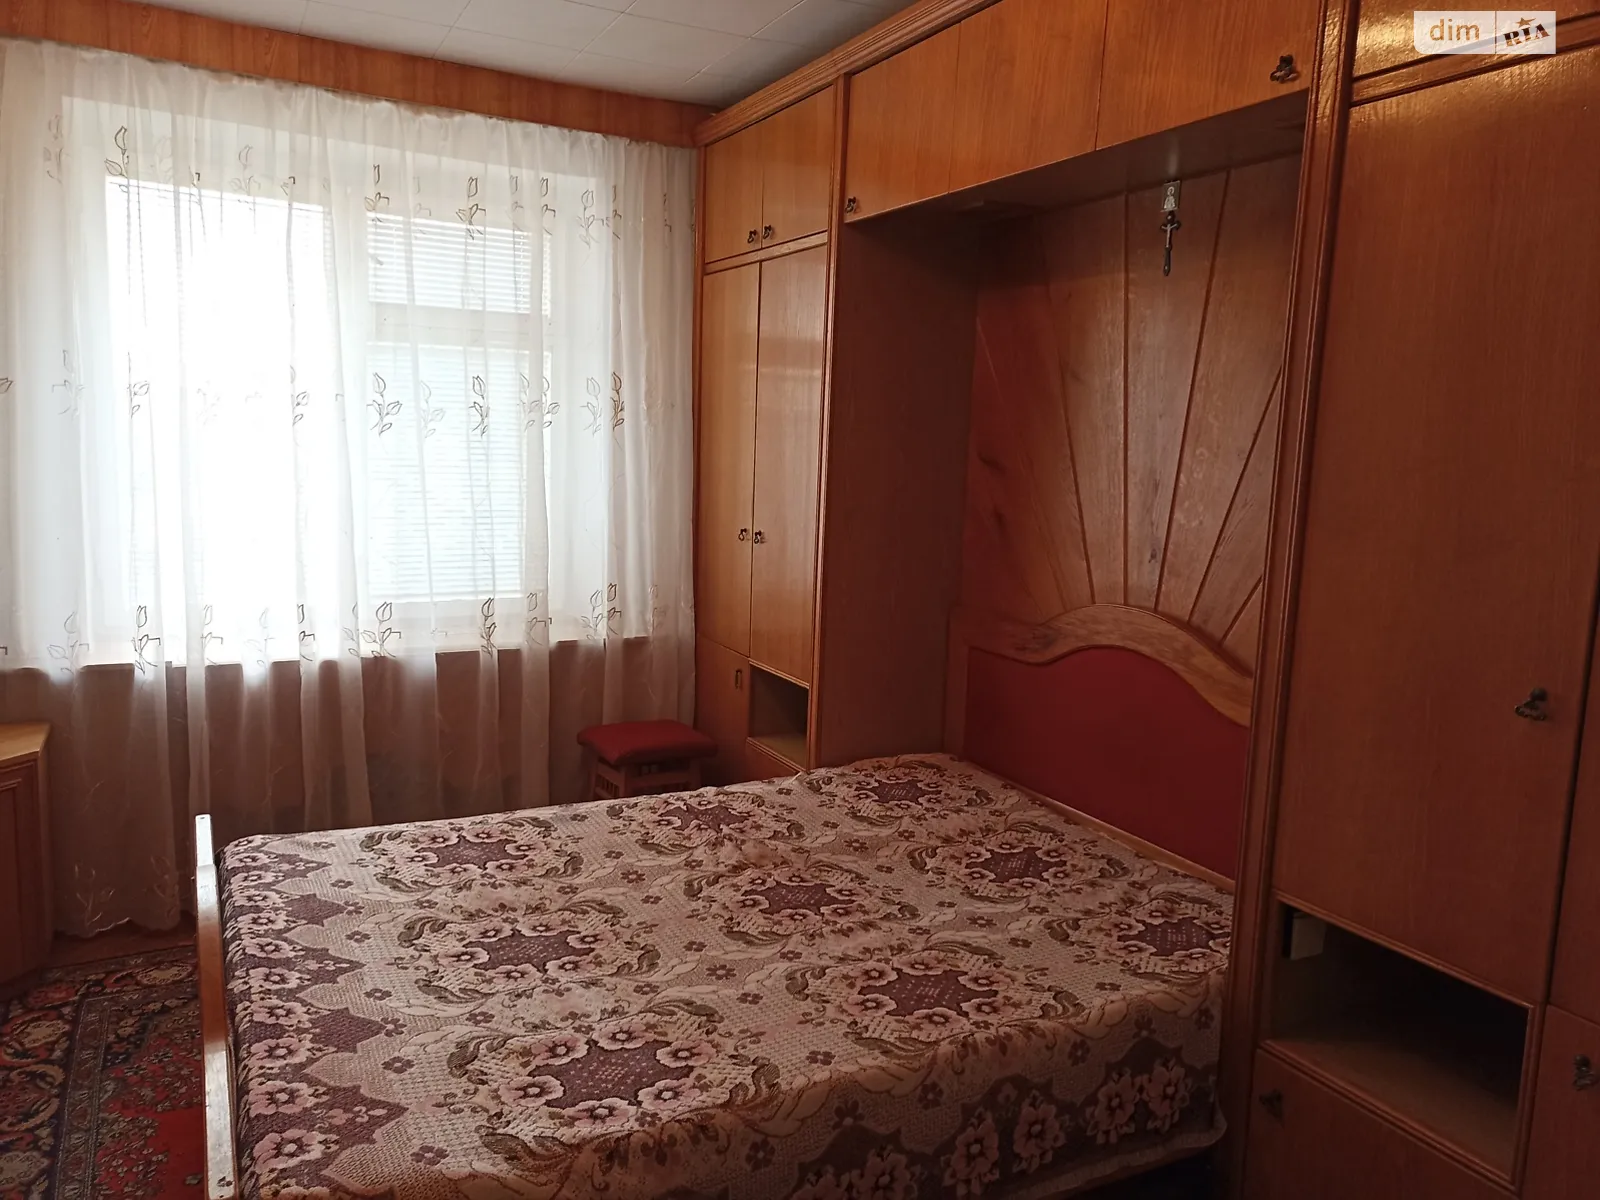 2-кімнатна квартира 52 кв. м у Луцьку - фото 2